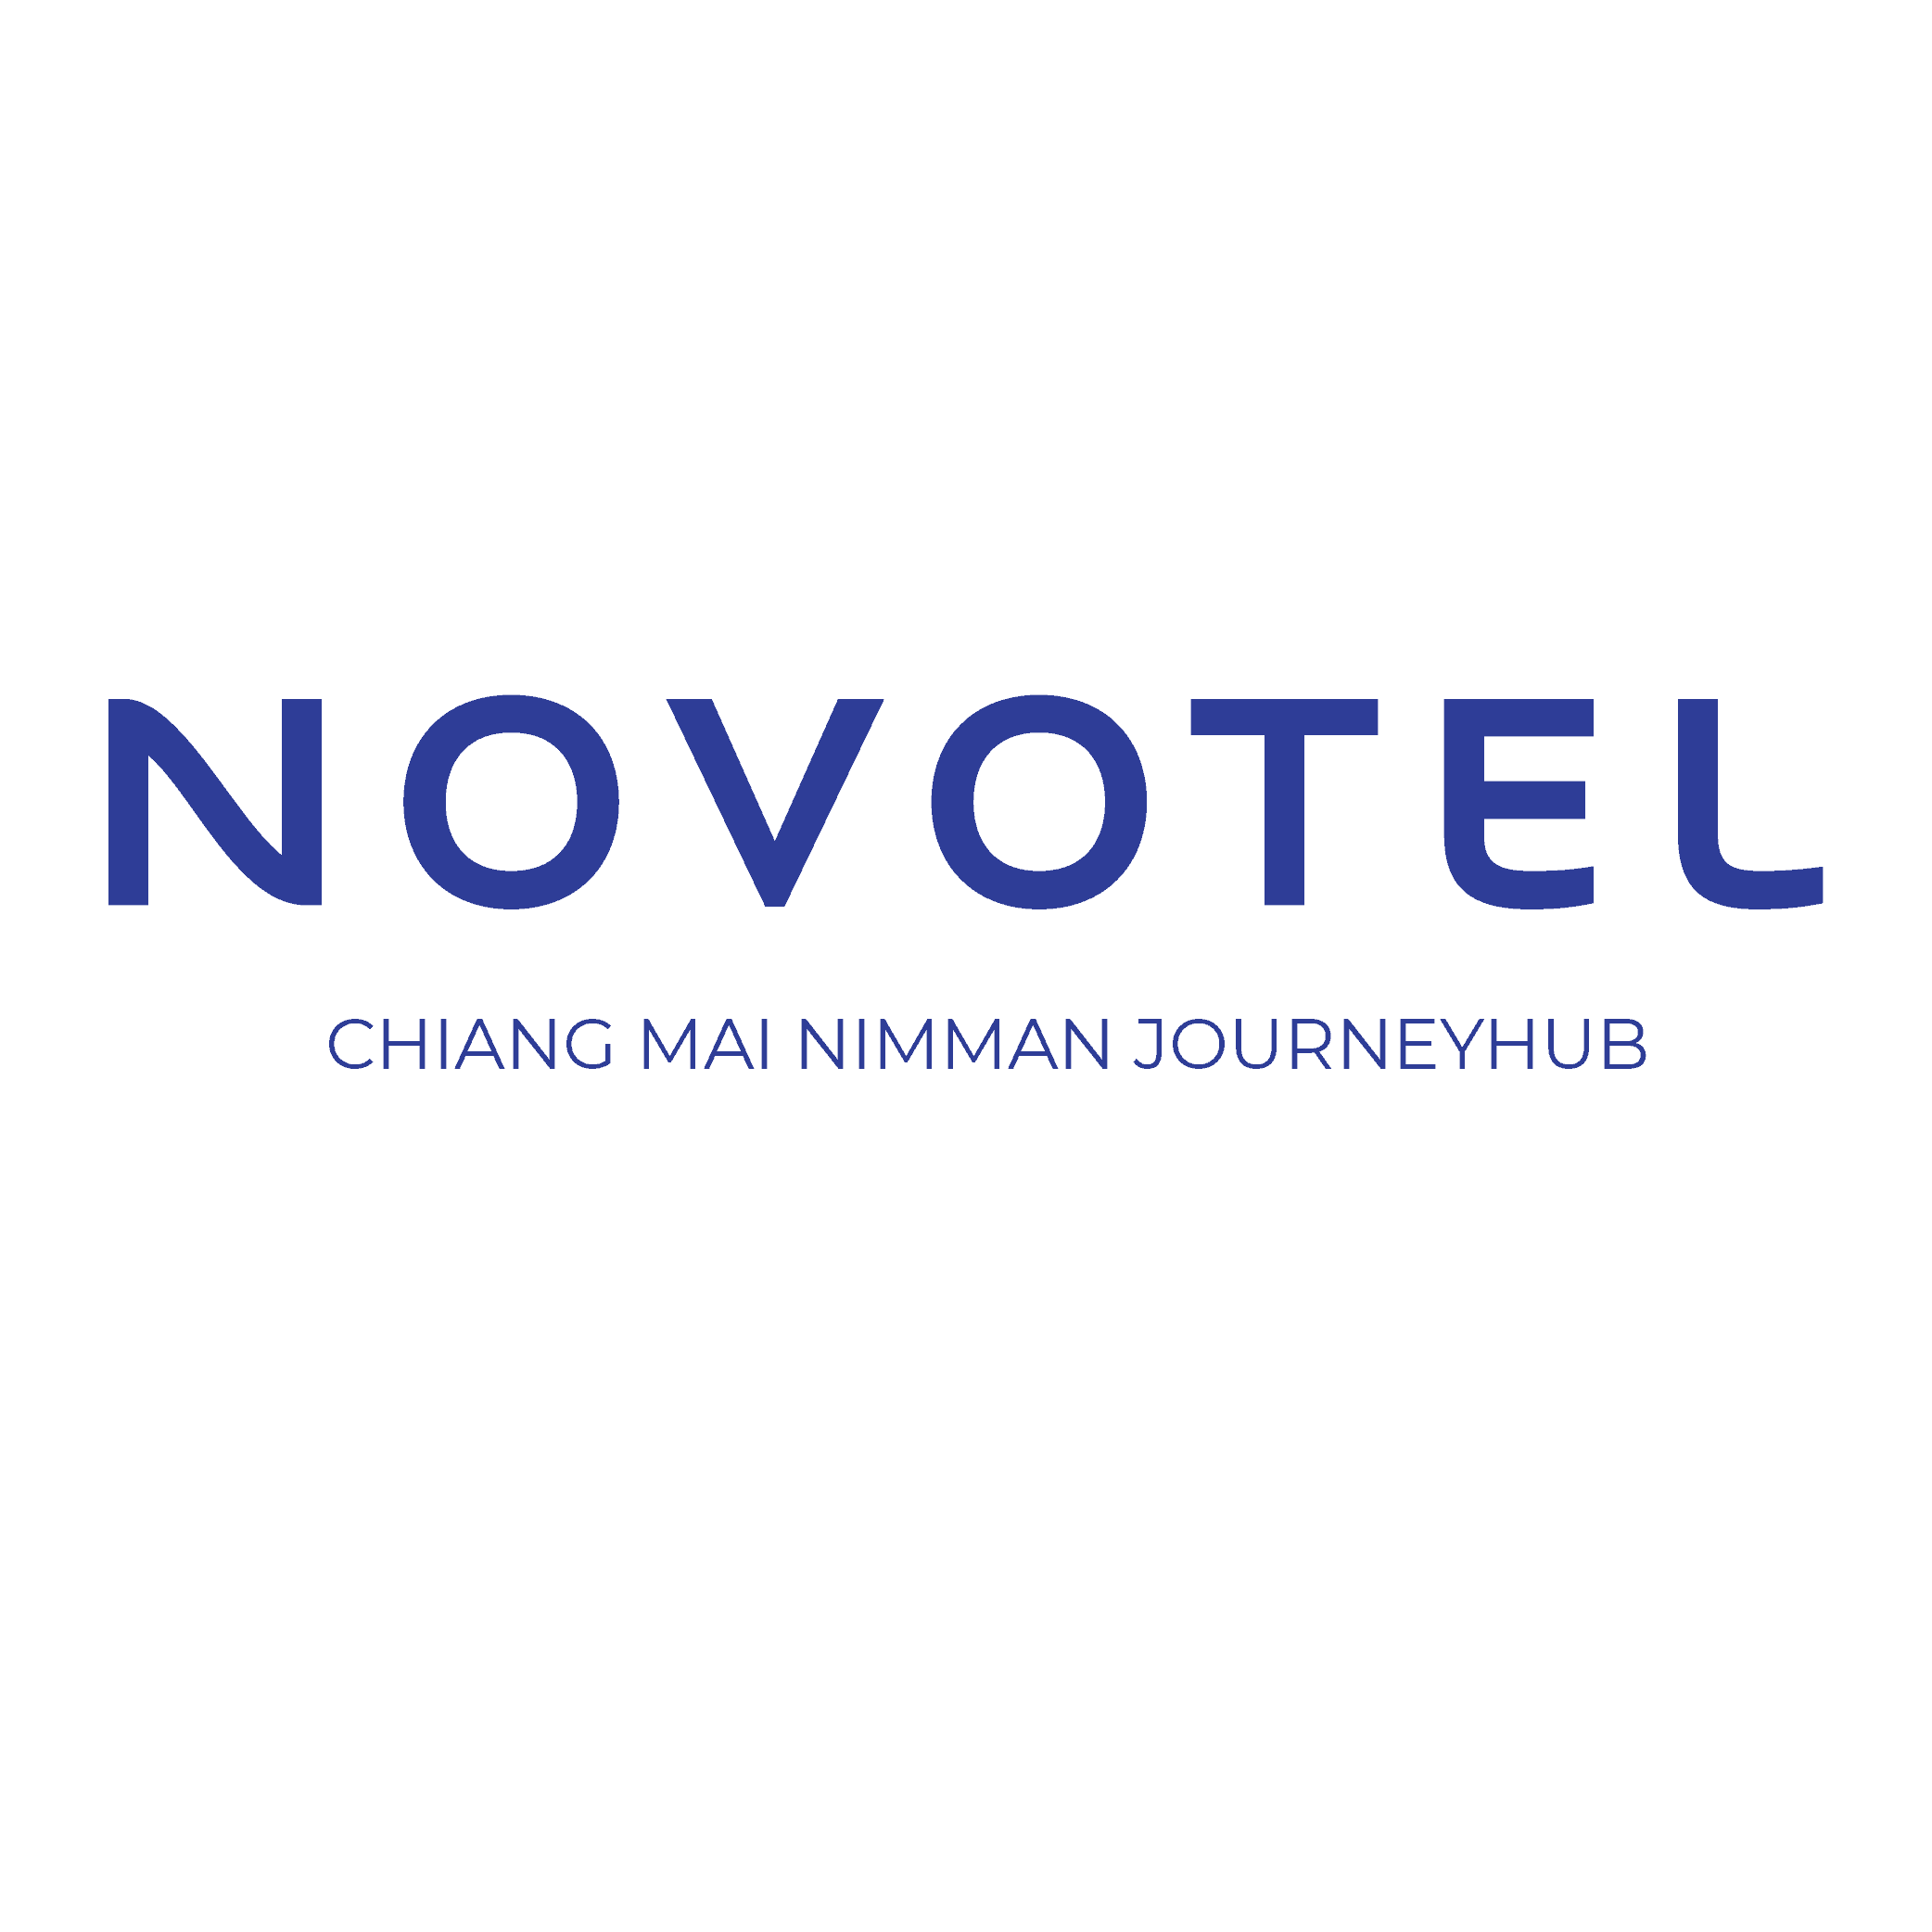 Novotel Chiang Mai Nimman Journeyhub - Online Vouchers